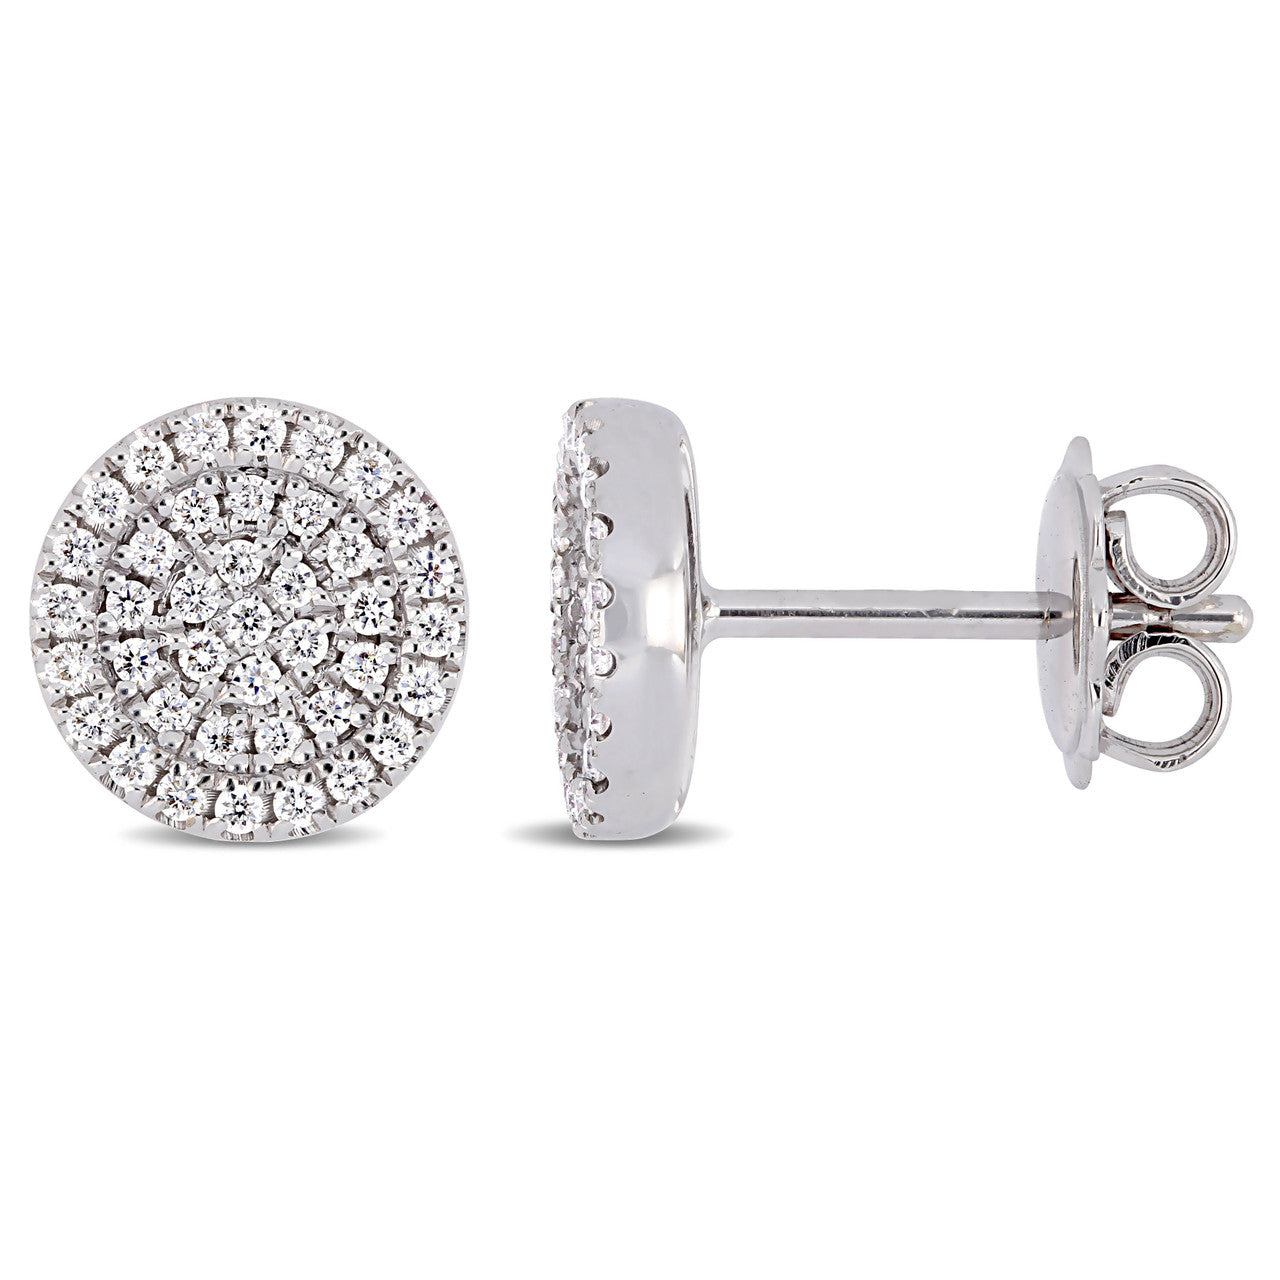 Ice Jewellery 1/3 CT TW Diamond Double Halo Stud Earrings In 14K White Gold - 75000004193 | Ice Jewellery Australia